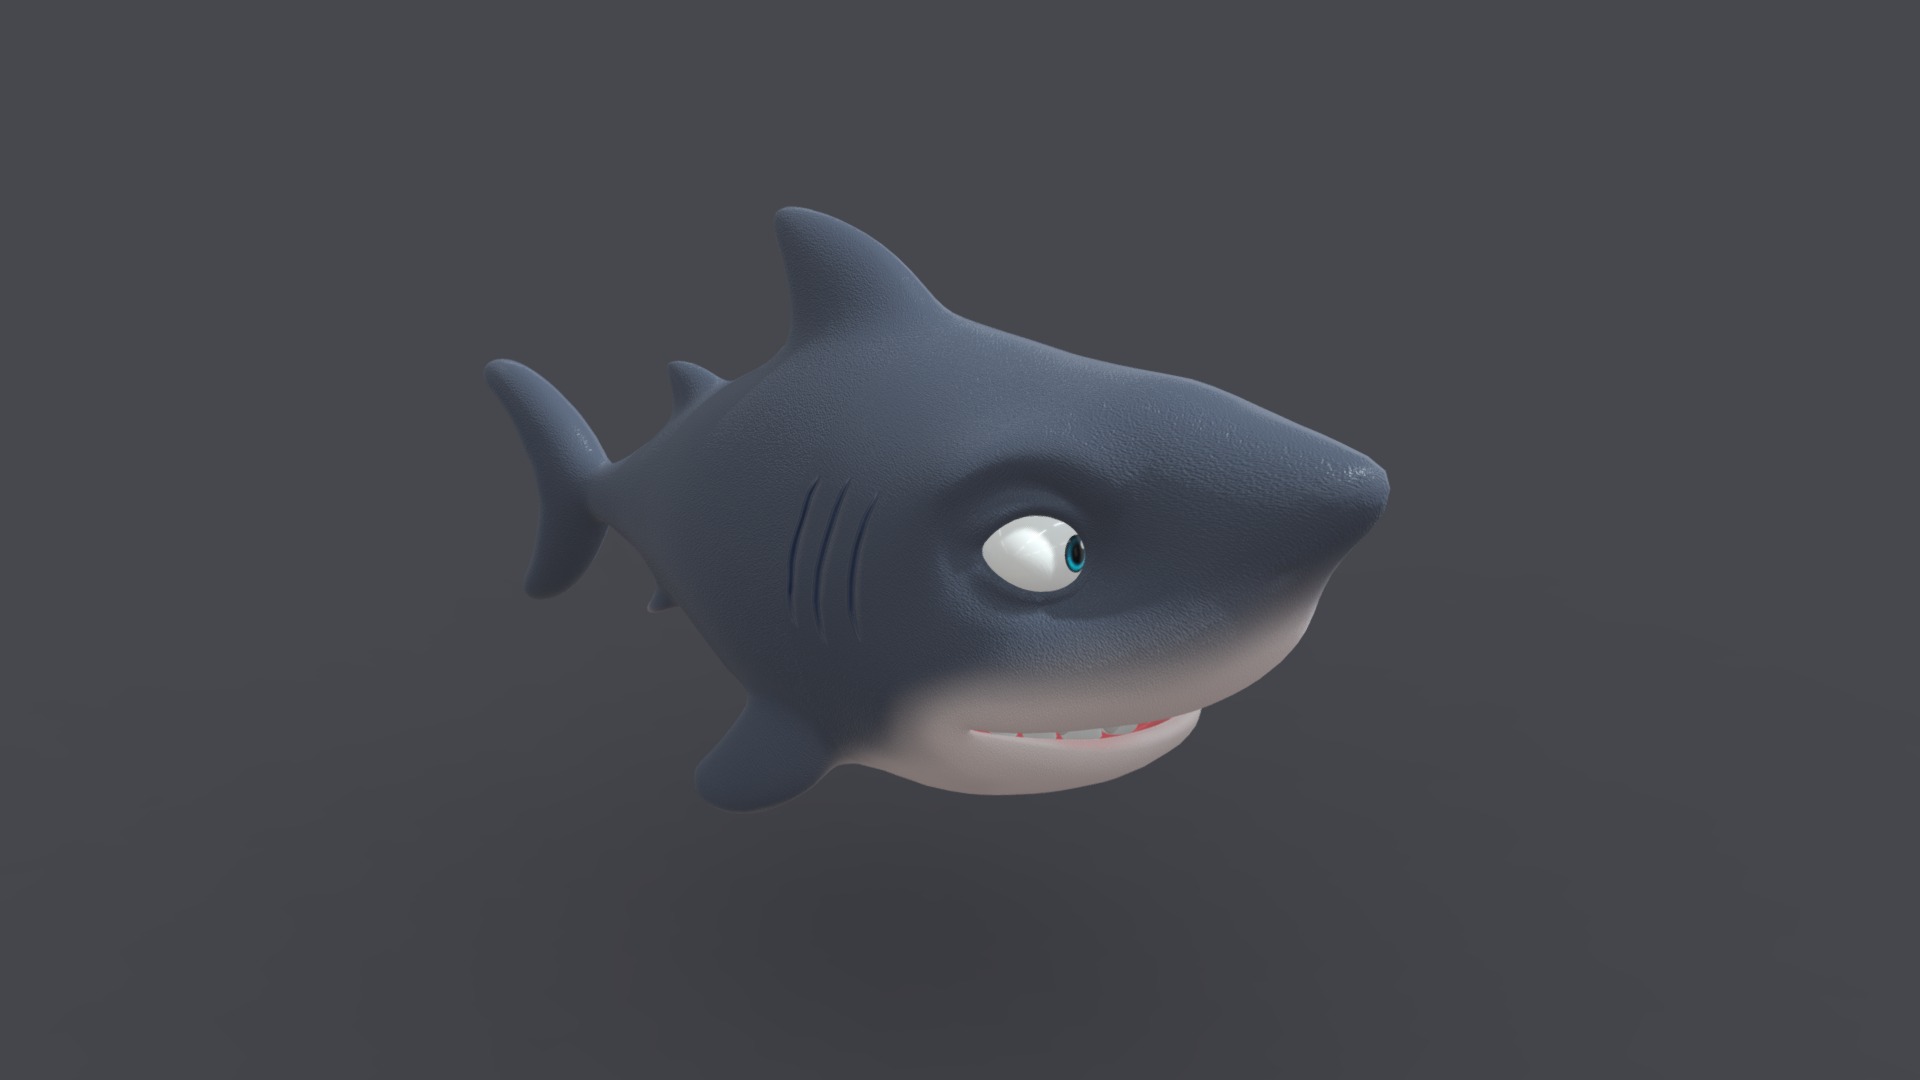 3D model Asset – Cartoons – Animal – Shark – 3D – Rig - This is a 3D model of the Asset - Cartoons - Animal - Shark - 3D - Rig. The 3D model is about a cartoon of a shark.